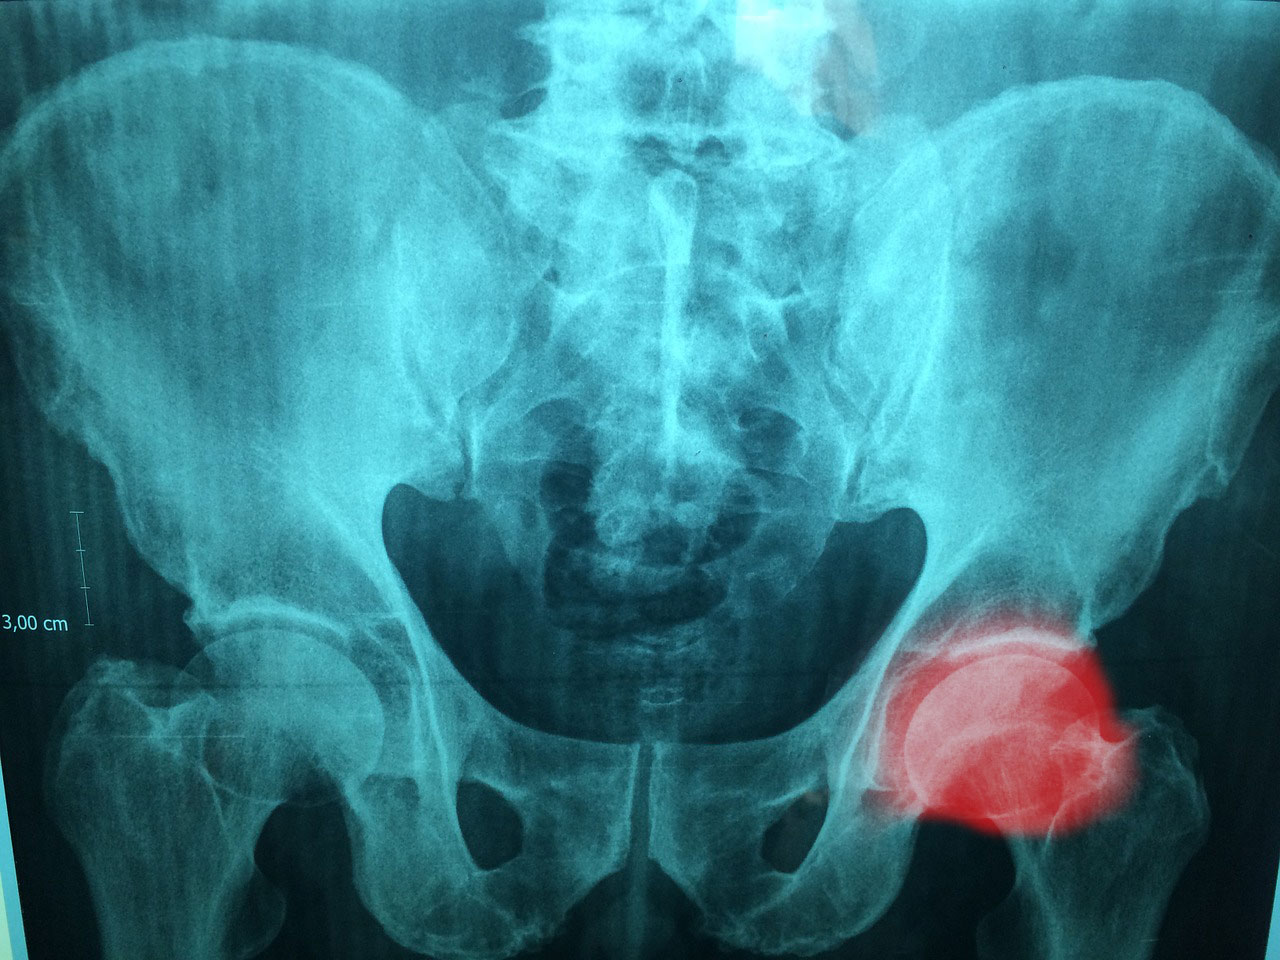 Relieve Hip Bursitis & Other Kinds Of Hip Pain